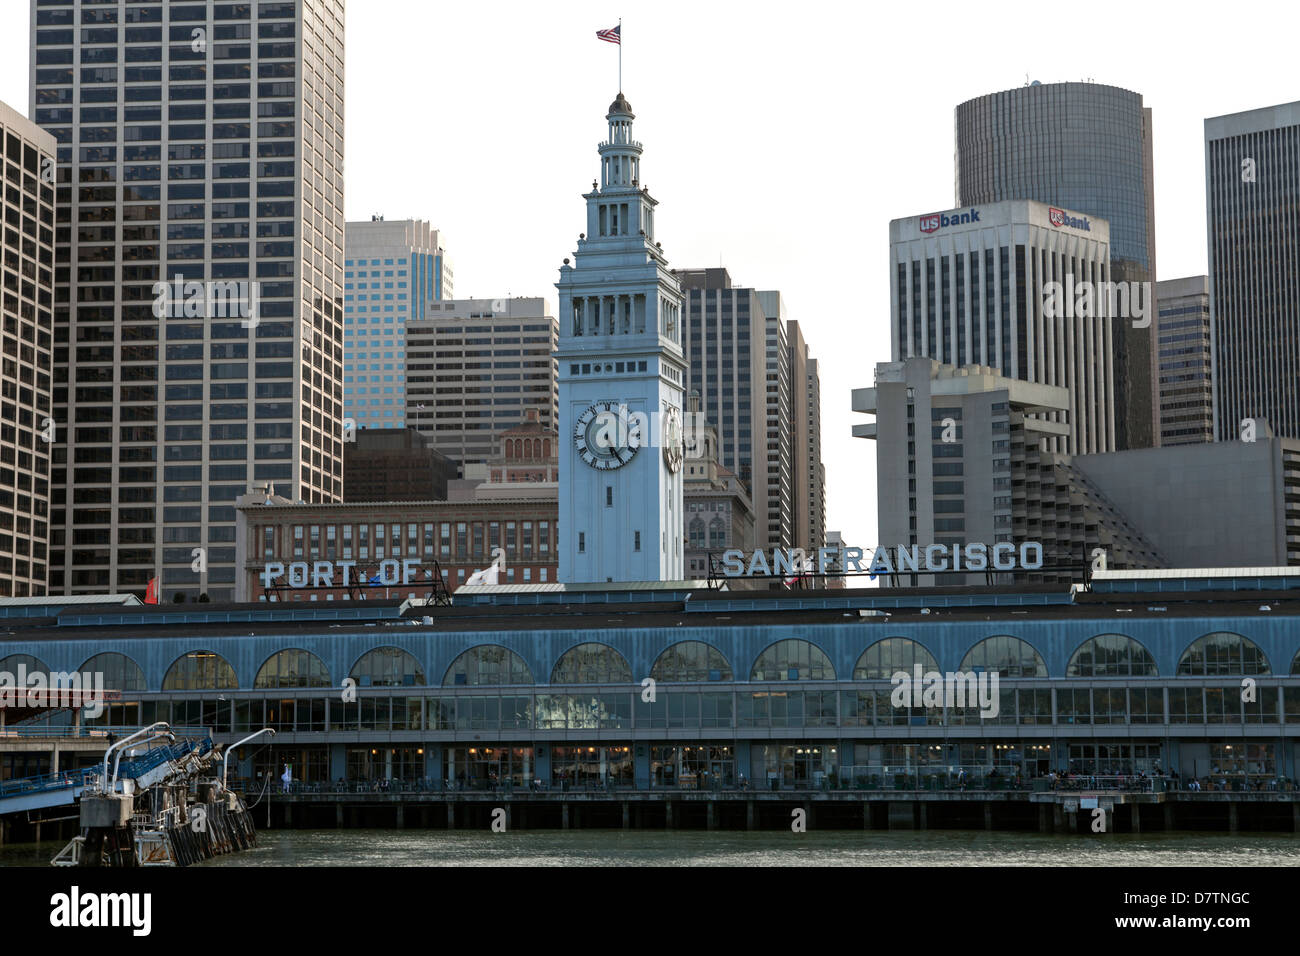 San Francisco Ferry Building am Embarcadero, San Francisco, Kalifornien, USA, Nordamerika Stockfoto